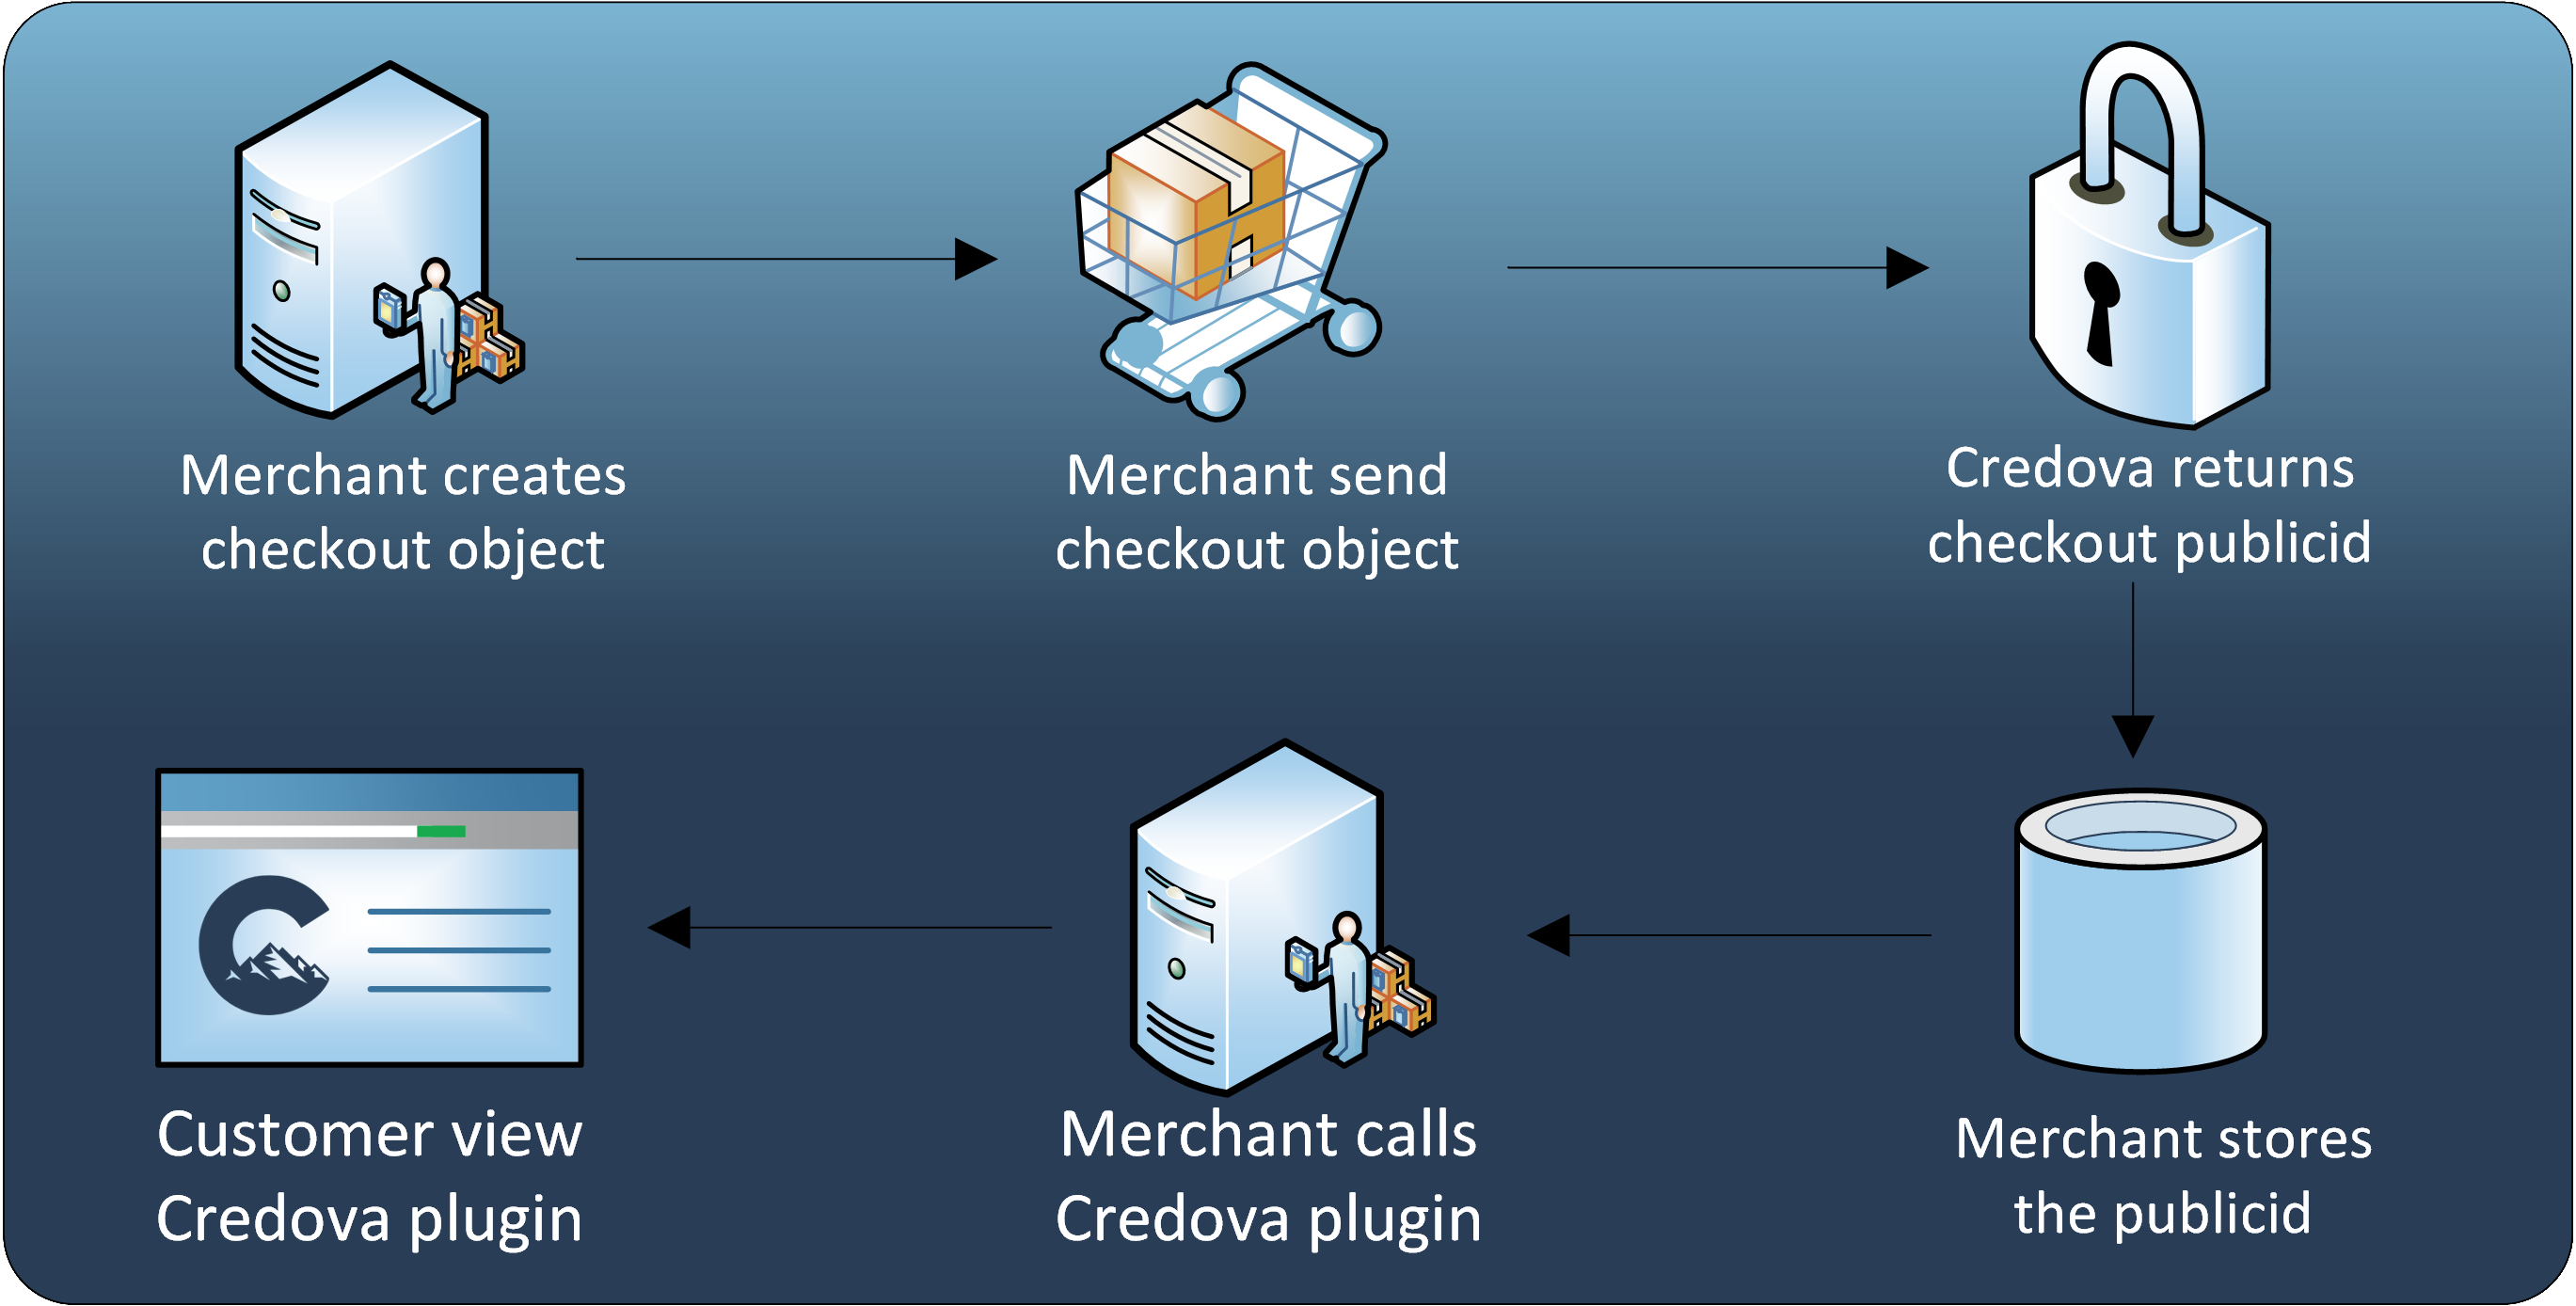 Merchant create object